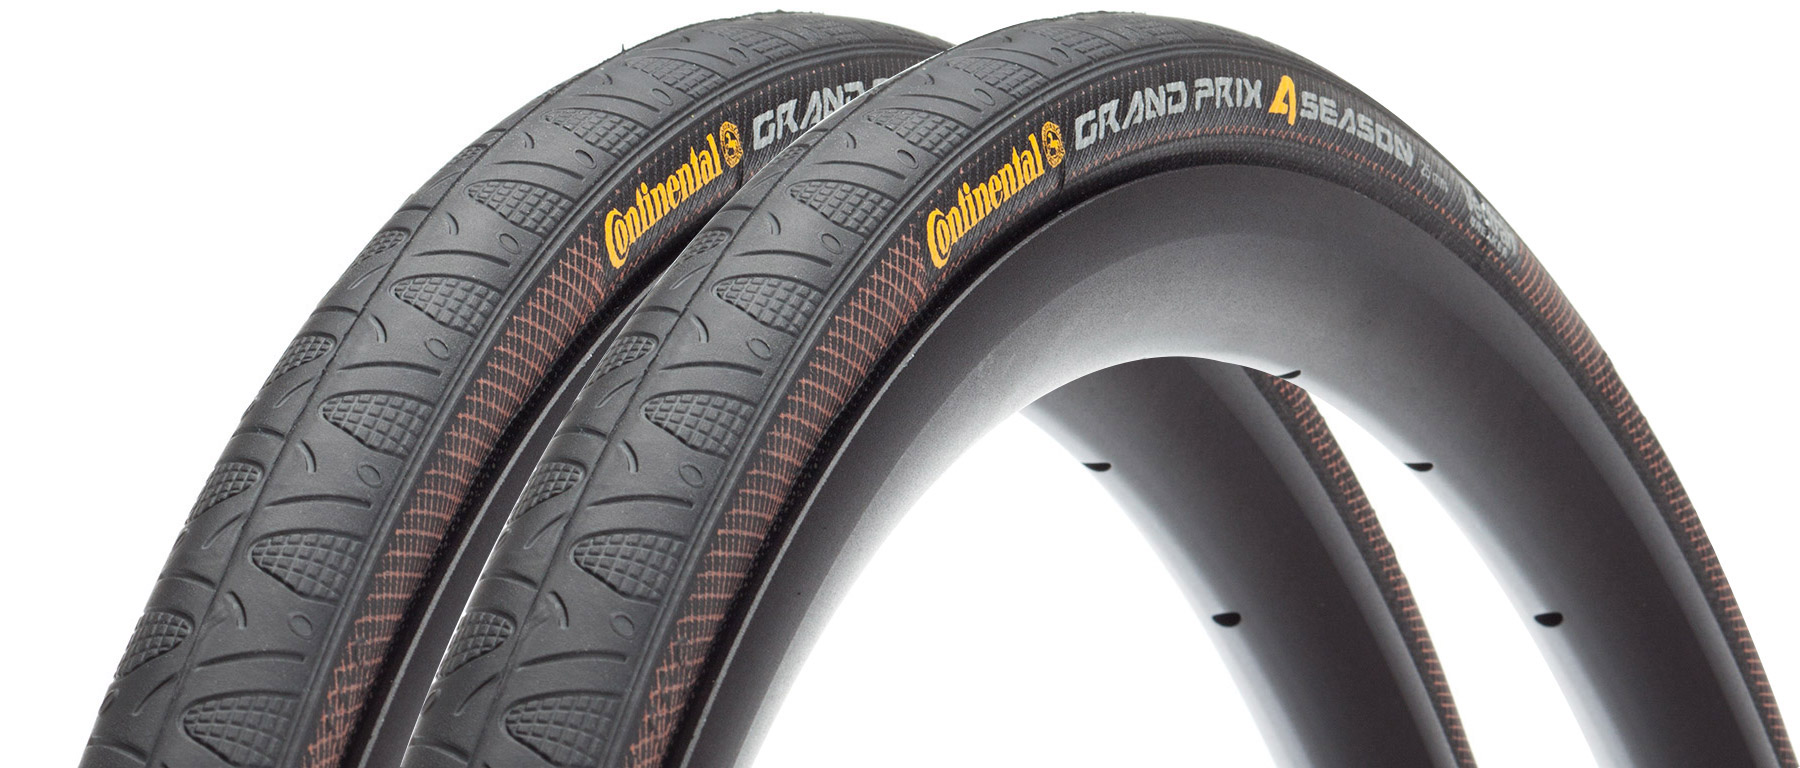 Continental Grand Prix 4-Season Road Tire 2-Pack